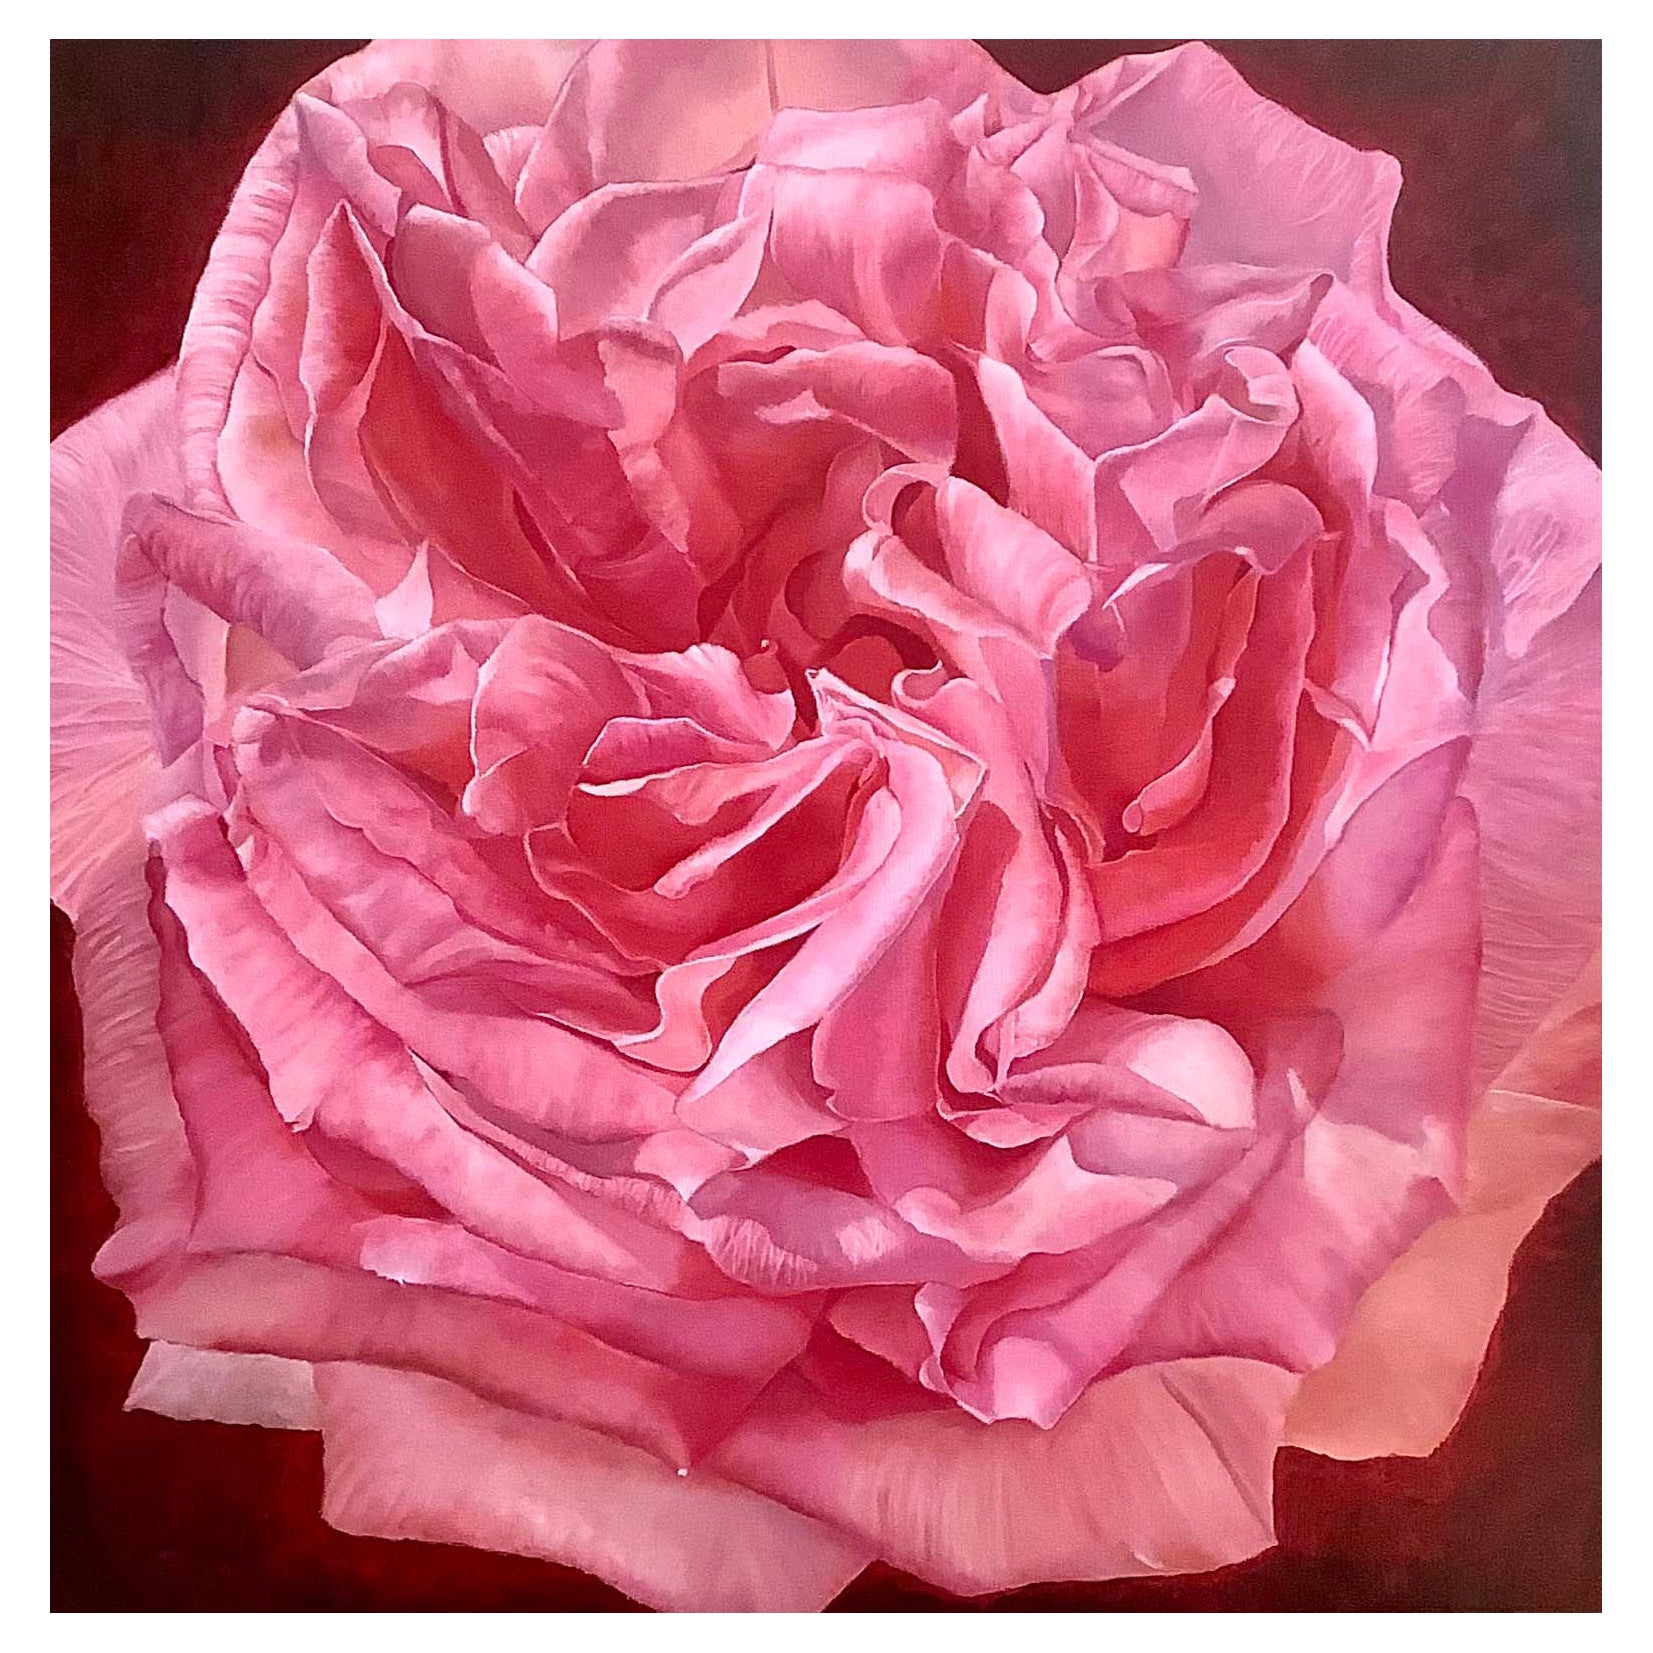 Framed Oil on Canvas "Vivienne" - Pink Color Rose by Shelly Gurton